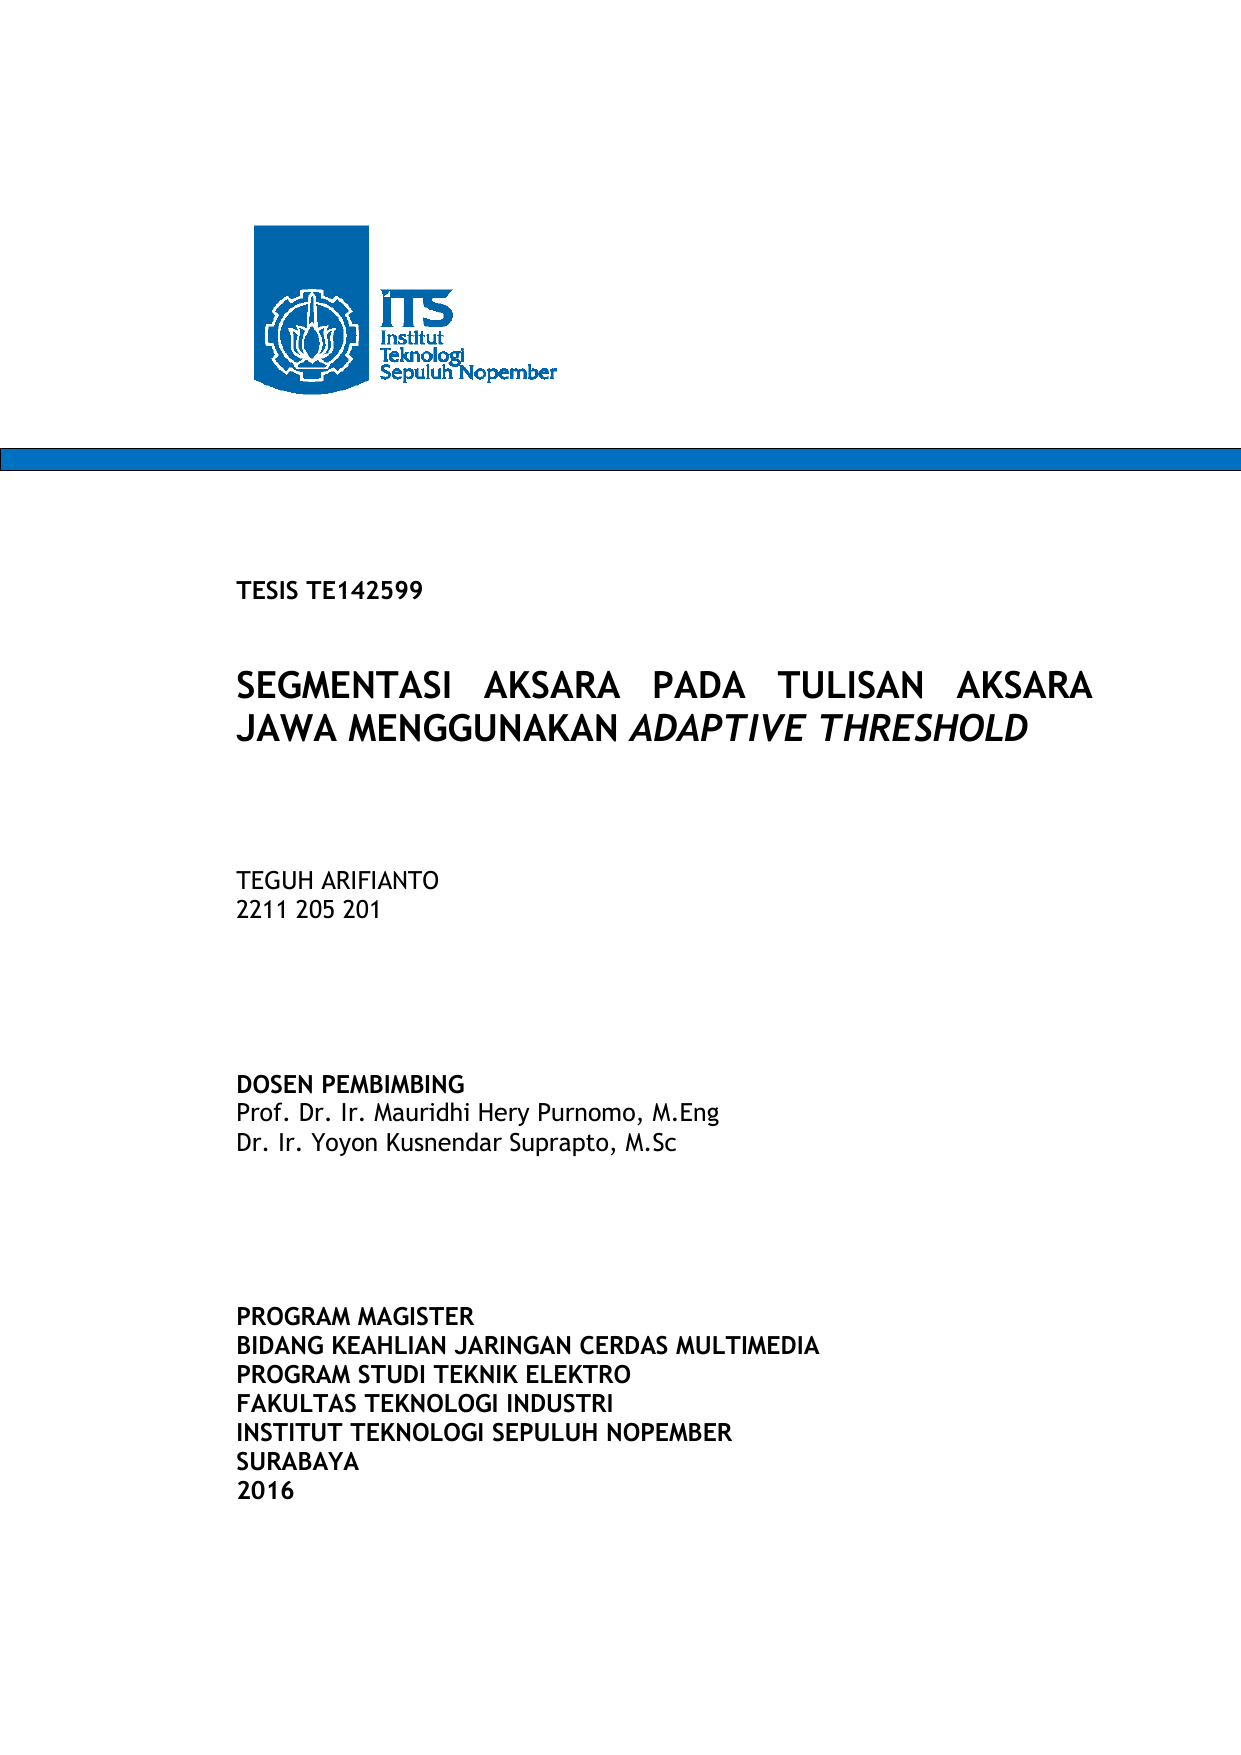 Segmentasi Aksara Pada Tulisan Aksara Jawa Repository